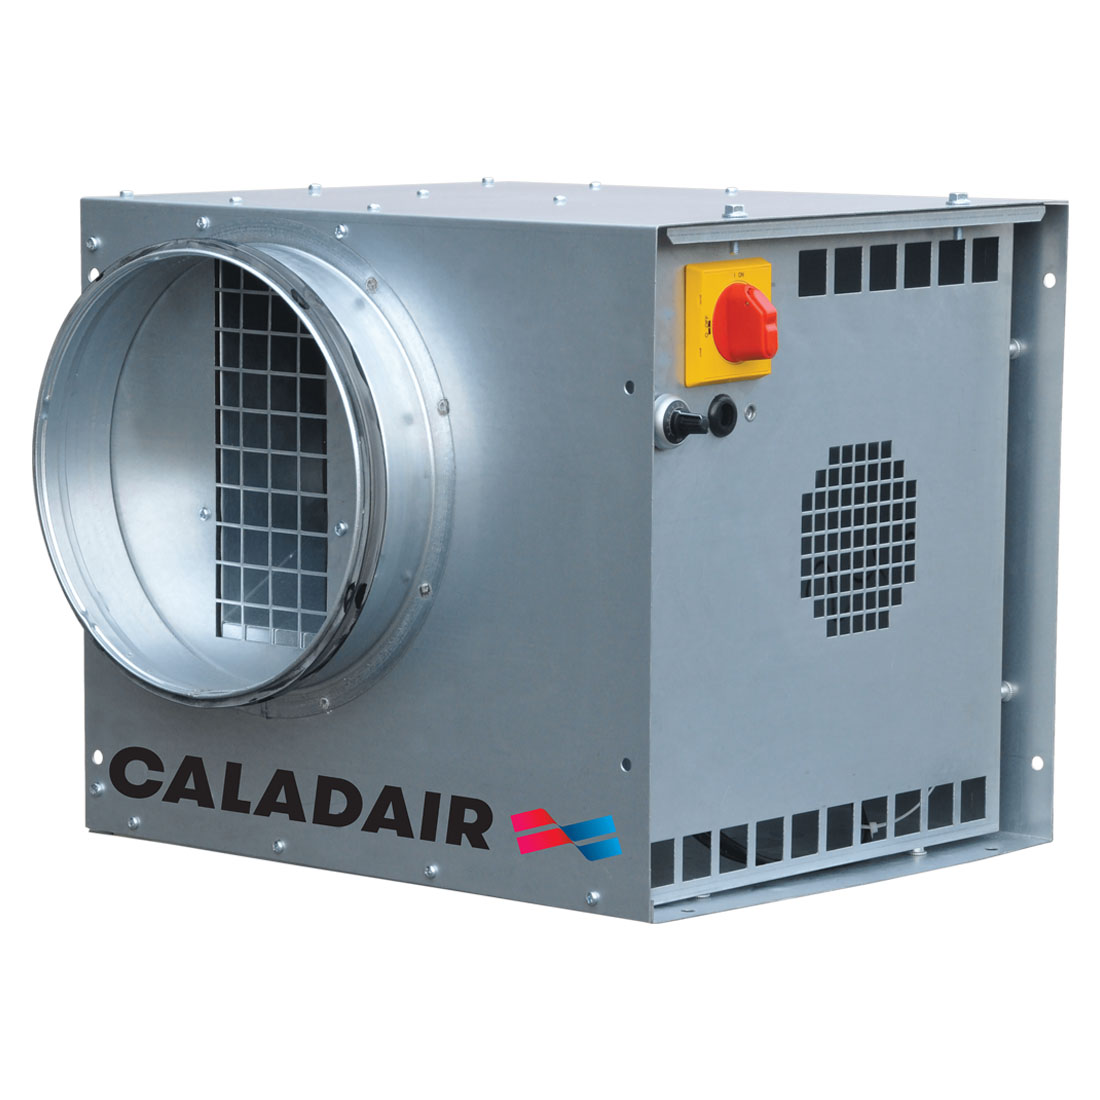 caladair-econizer-extract-box-fan-bpc-ventilation